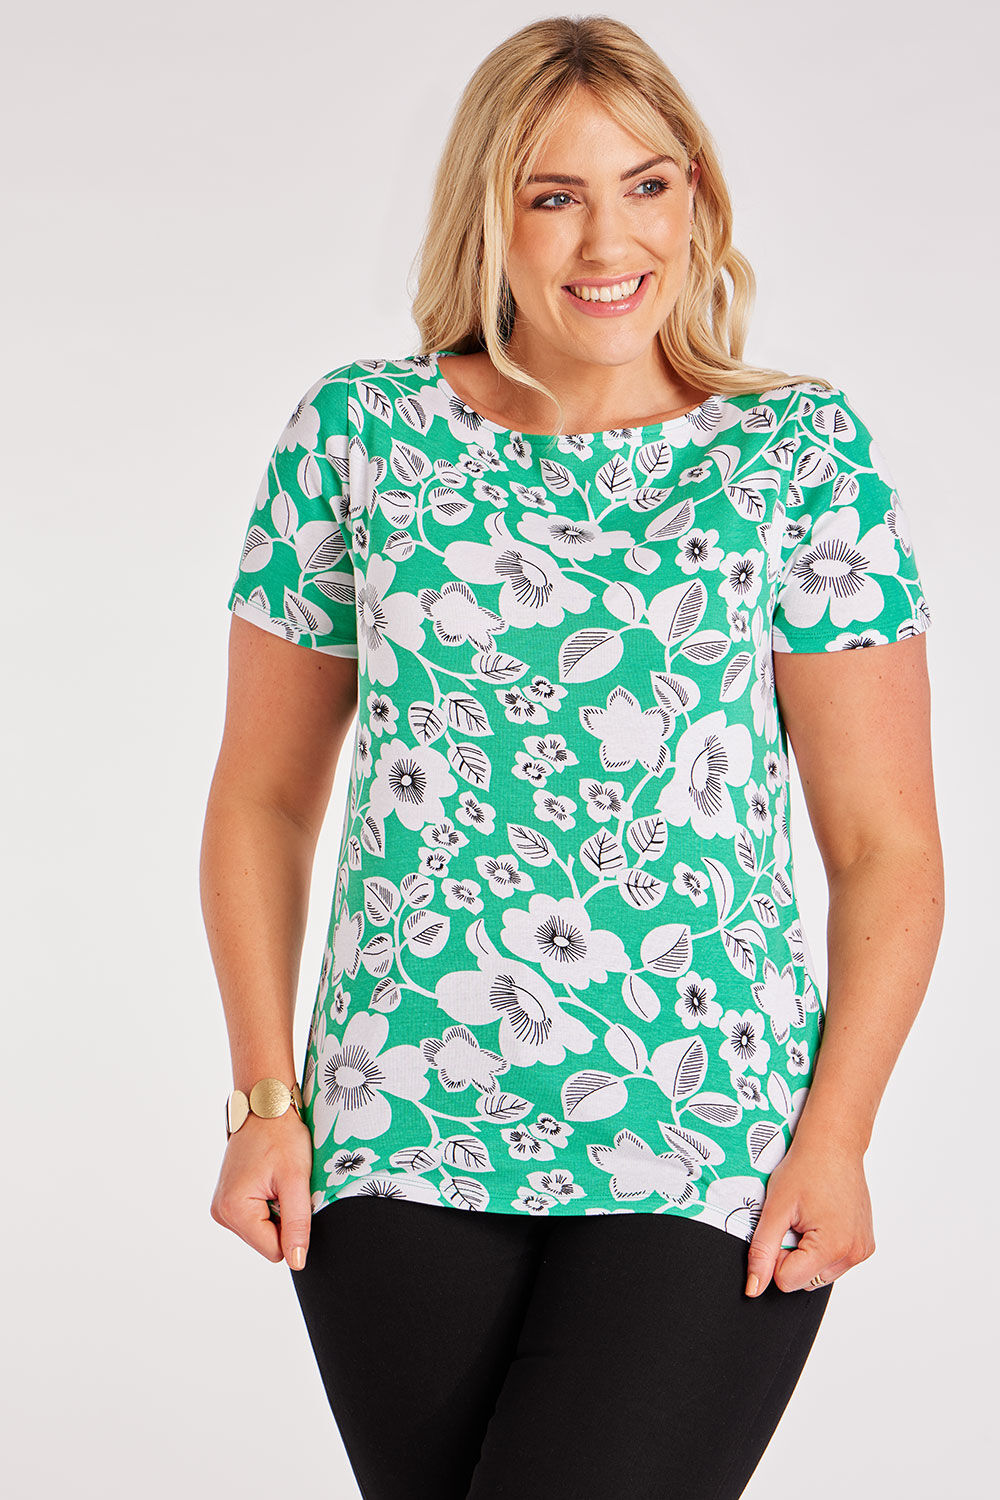 Bonmarche Women’s Green Cotton Floral Stylish Short Sleeve Retro Boat Neck T-Shirt, Size: 12